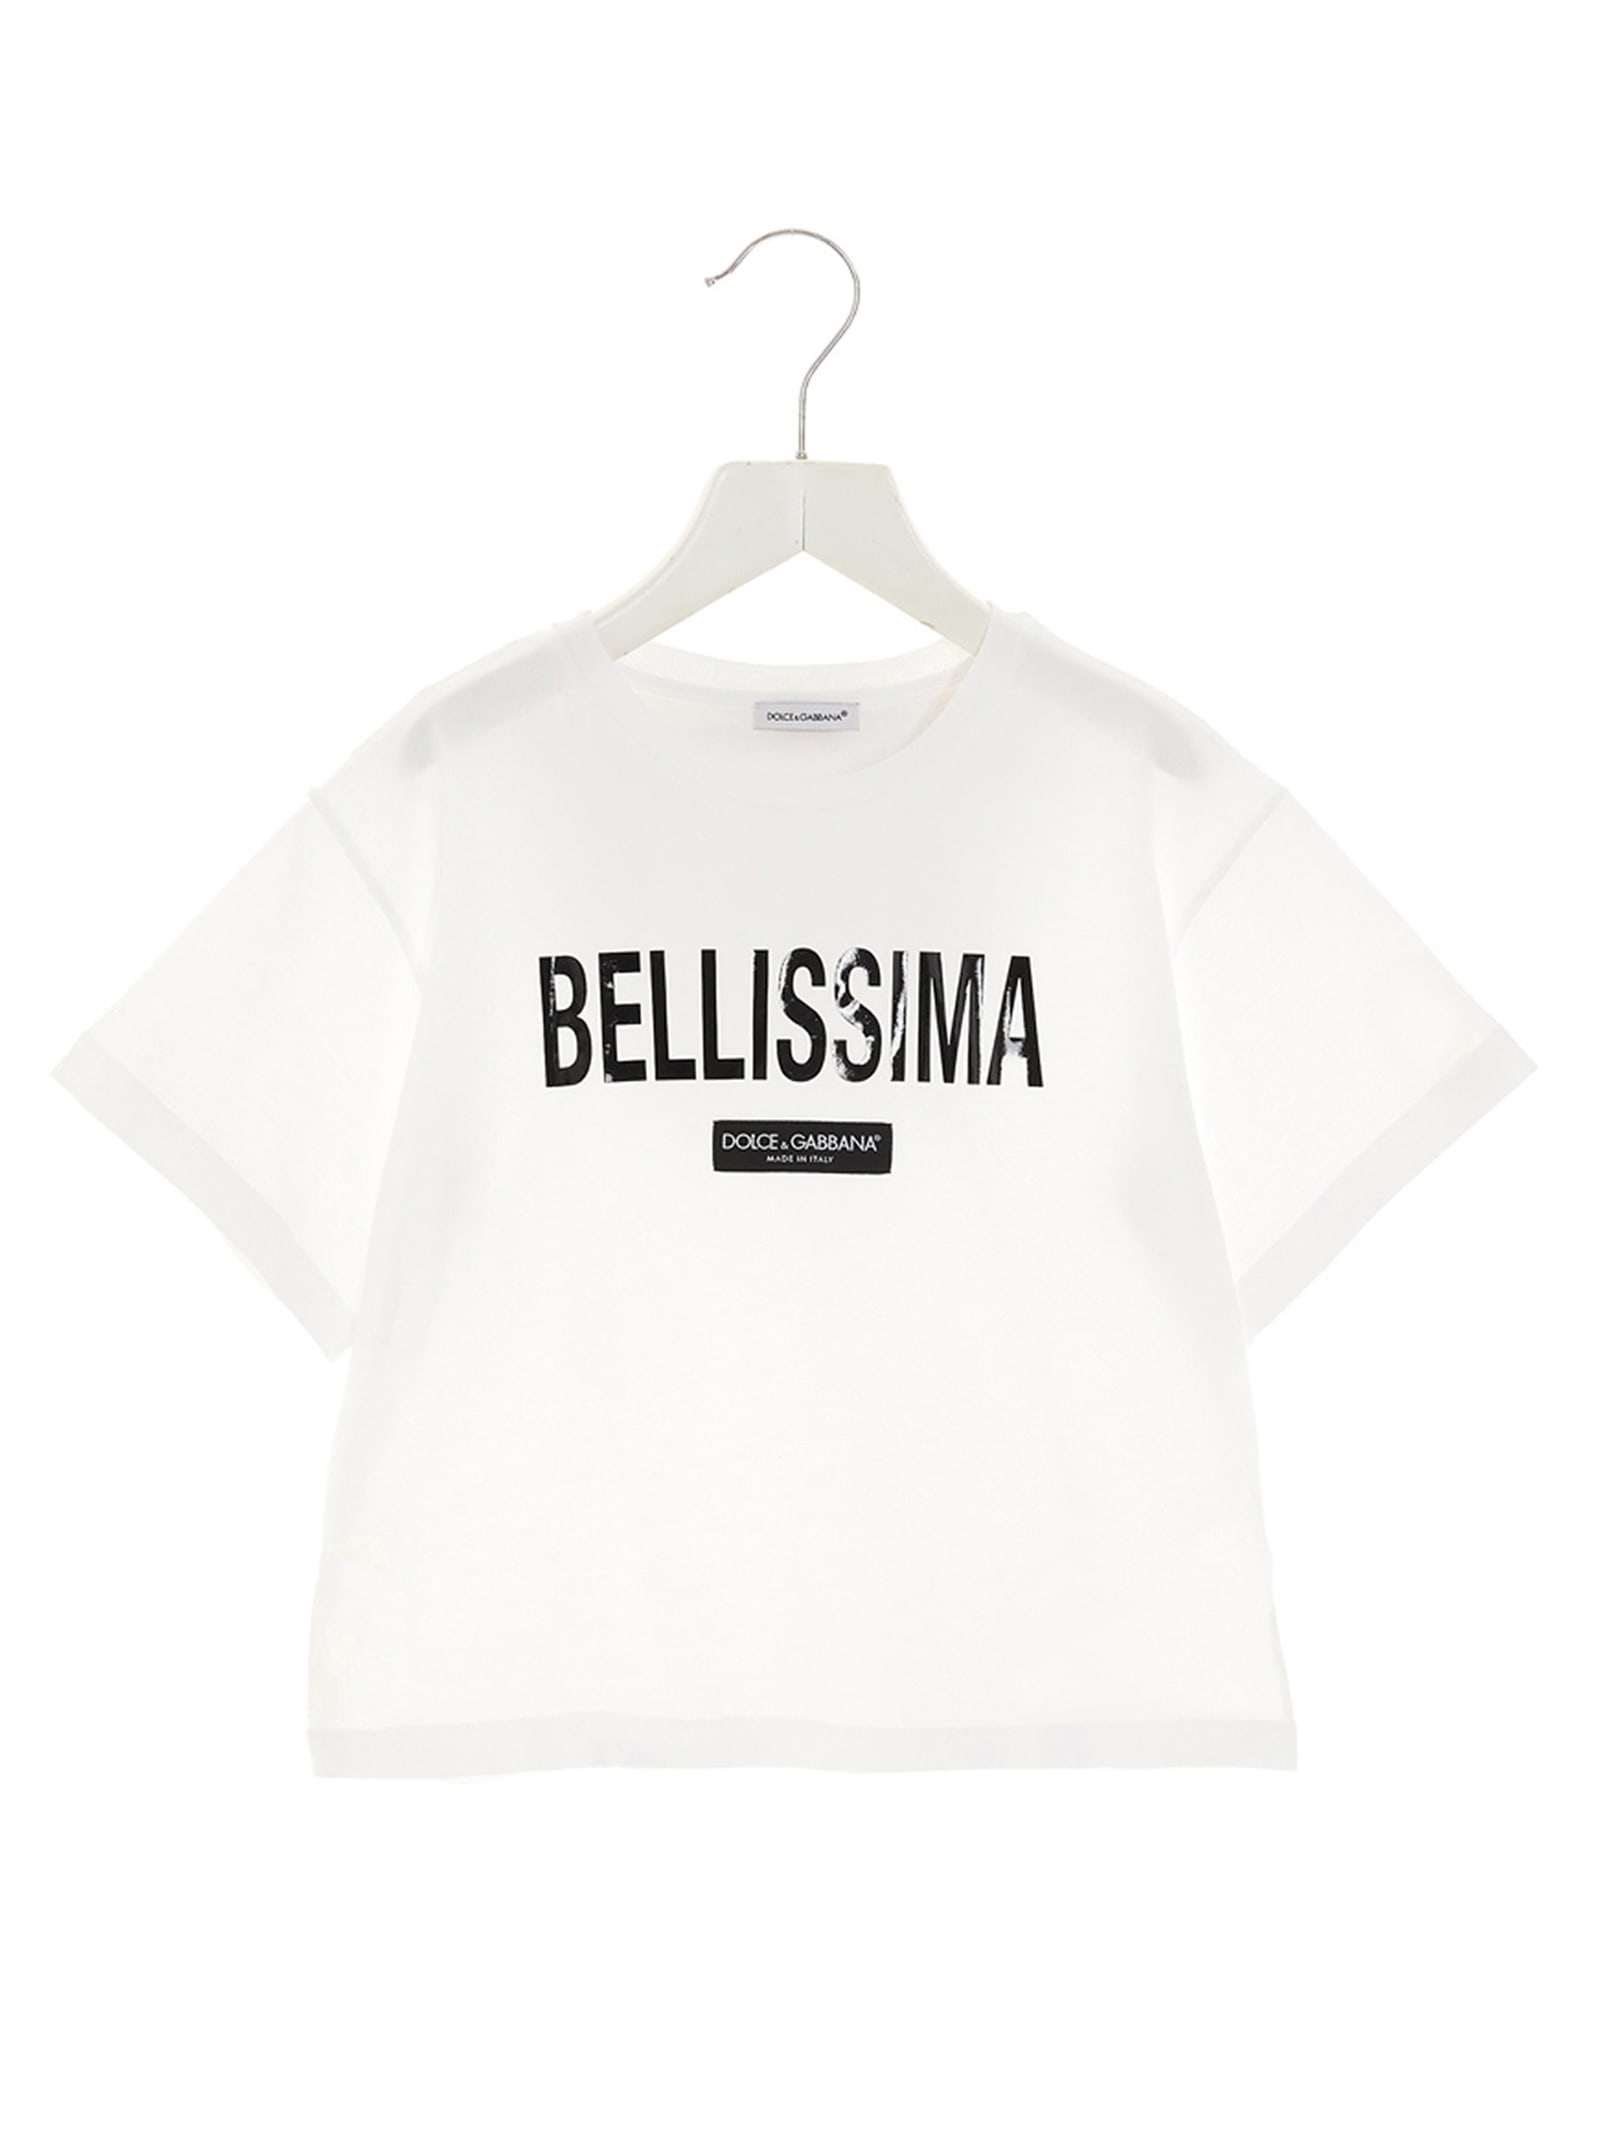 Dolce & Gabbana bellissima T-shirt